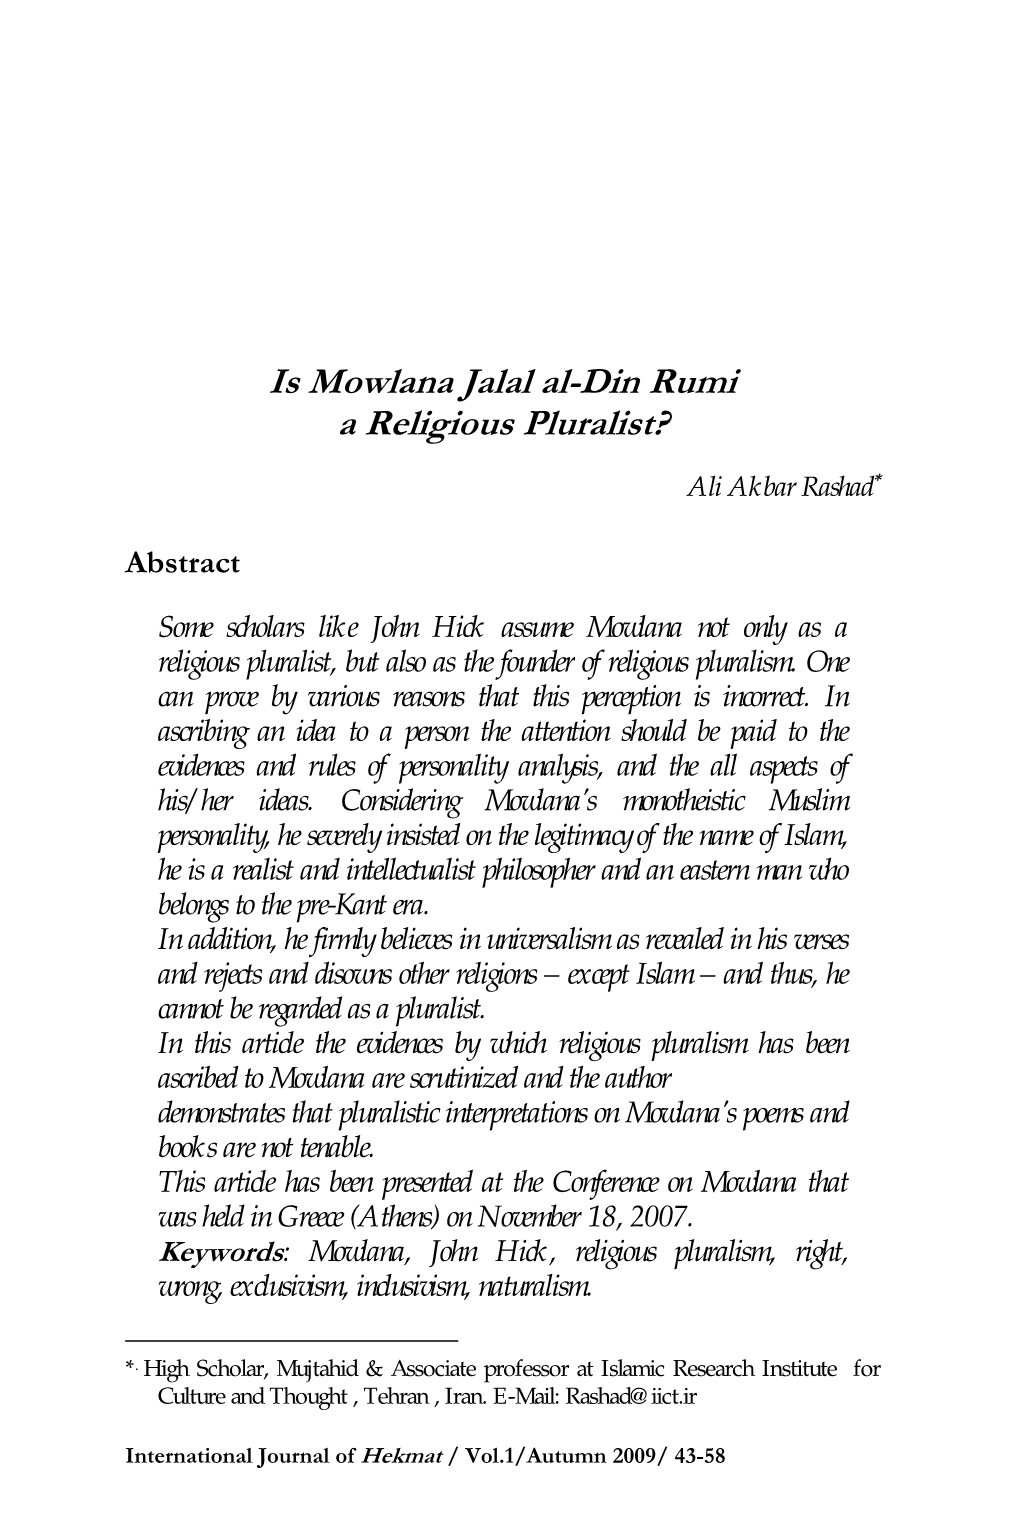 Is Mowlana Jalal Al-Din Rumi a Religious Pluralist?